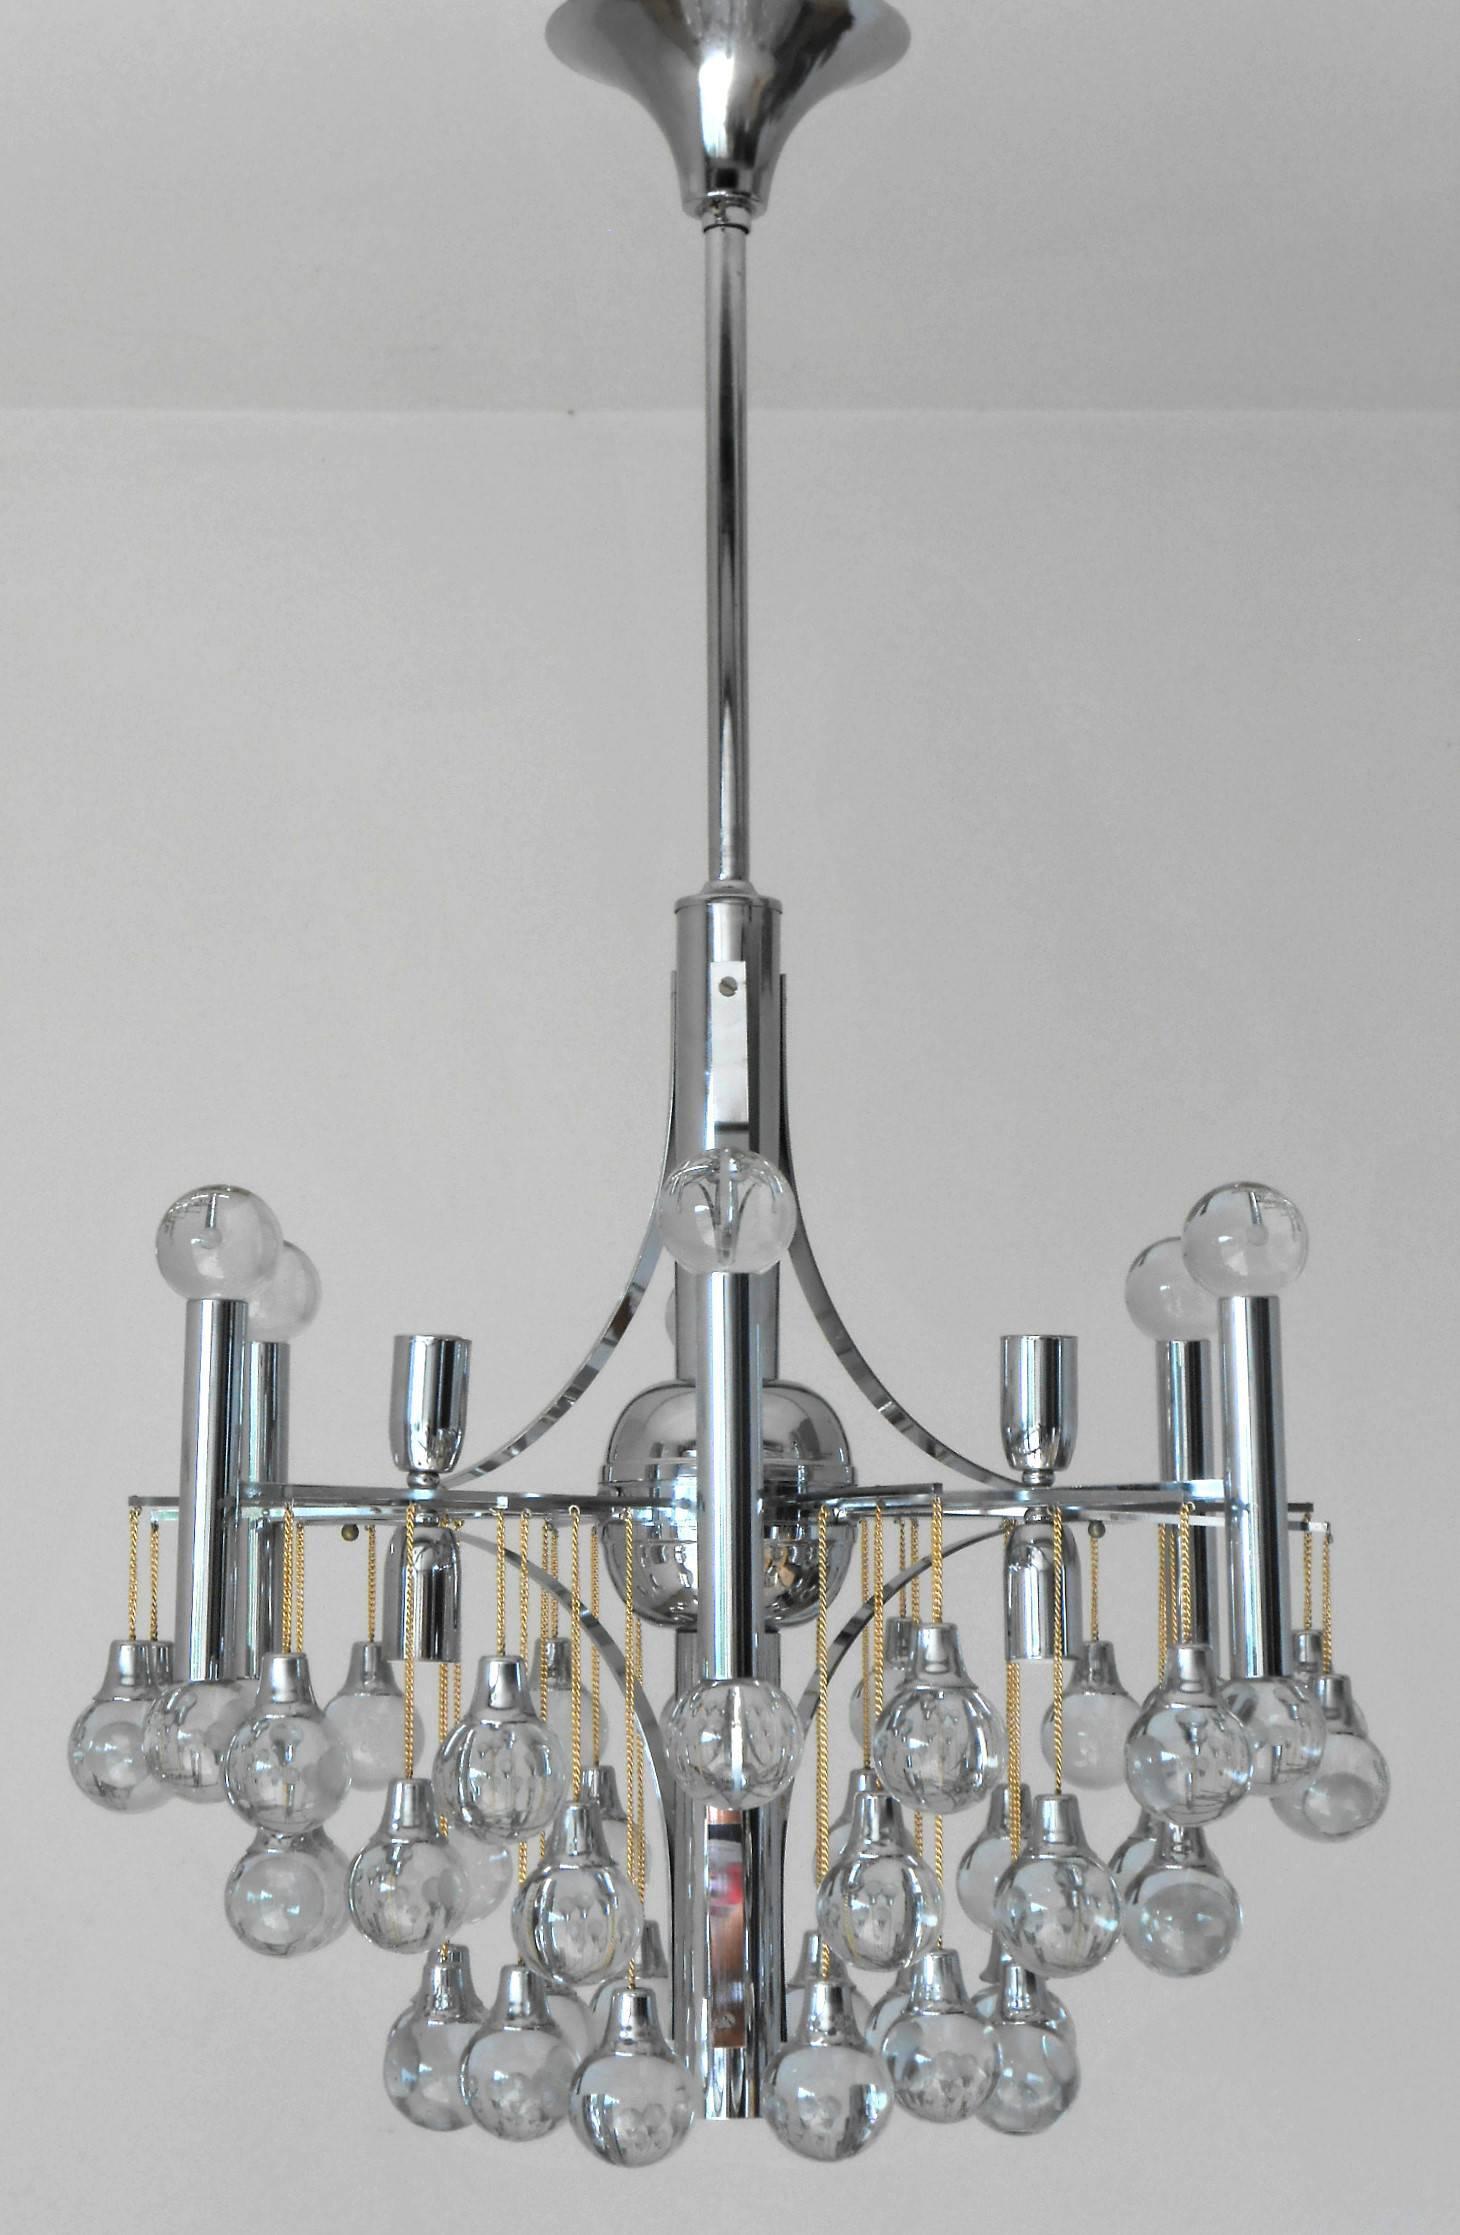 Vintage Italian chandelier w/ multiple glass spheres & chrome metal frame. Designed by Sciolari circa 1970.